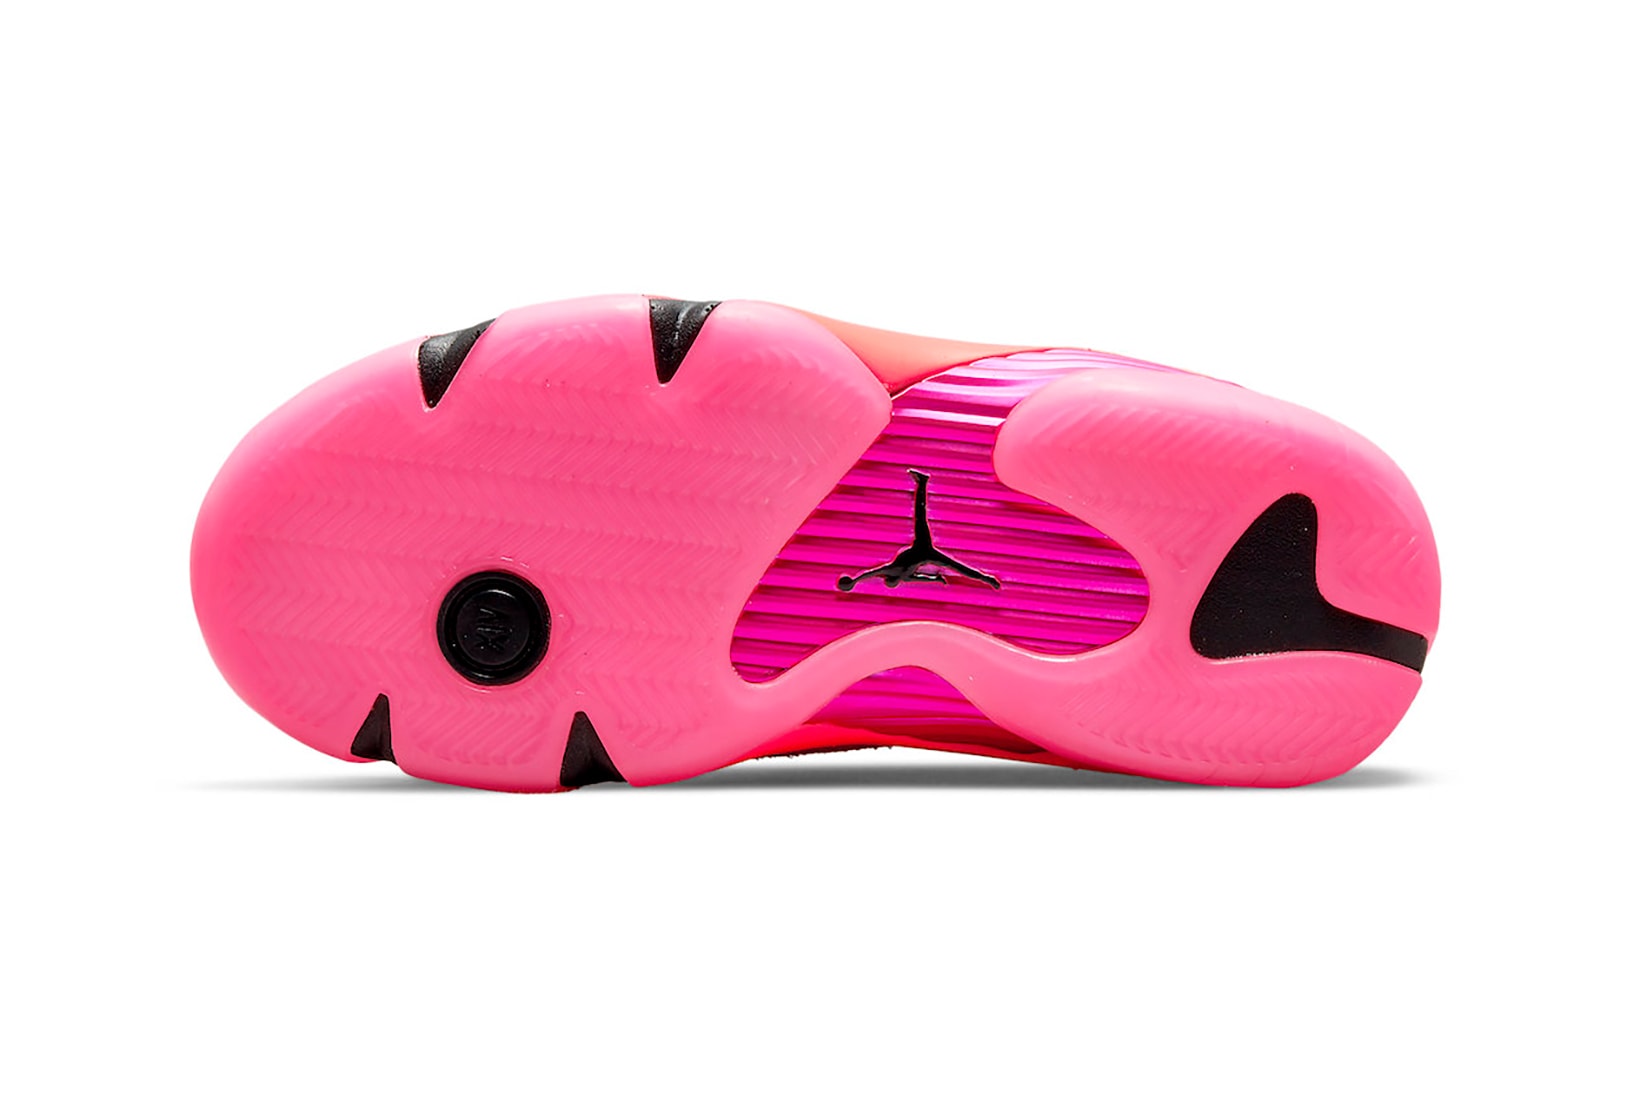 Nike Air Jordan 14 AJ14 Low Shocking Pink Black Womens Sneakers Footwear Shoes Kicks